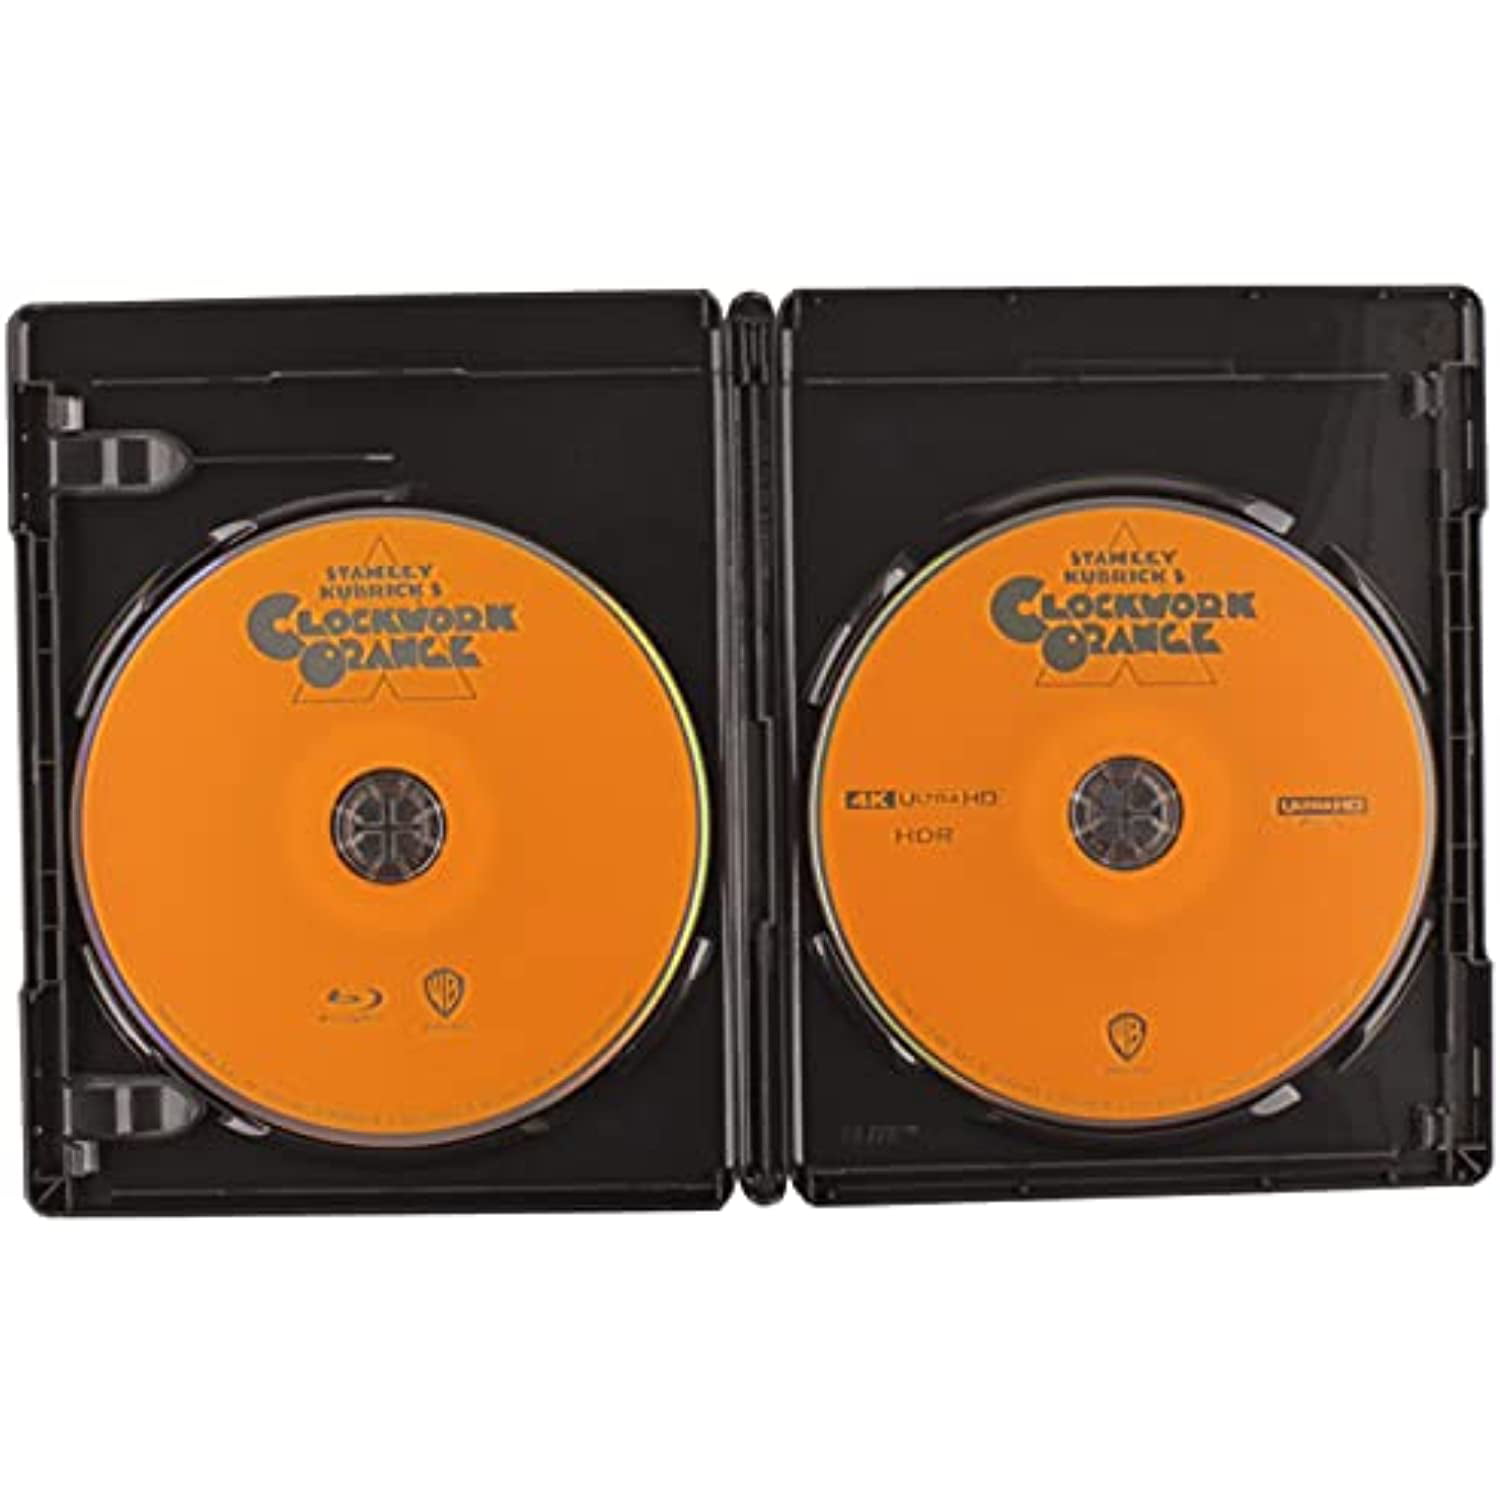 A Clockwork Orange (4K Ultra HD + Blu-ray + Digital Copy 